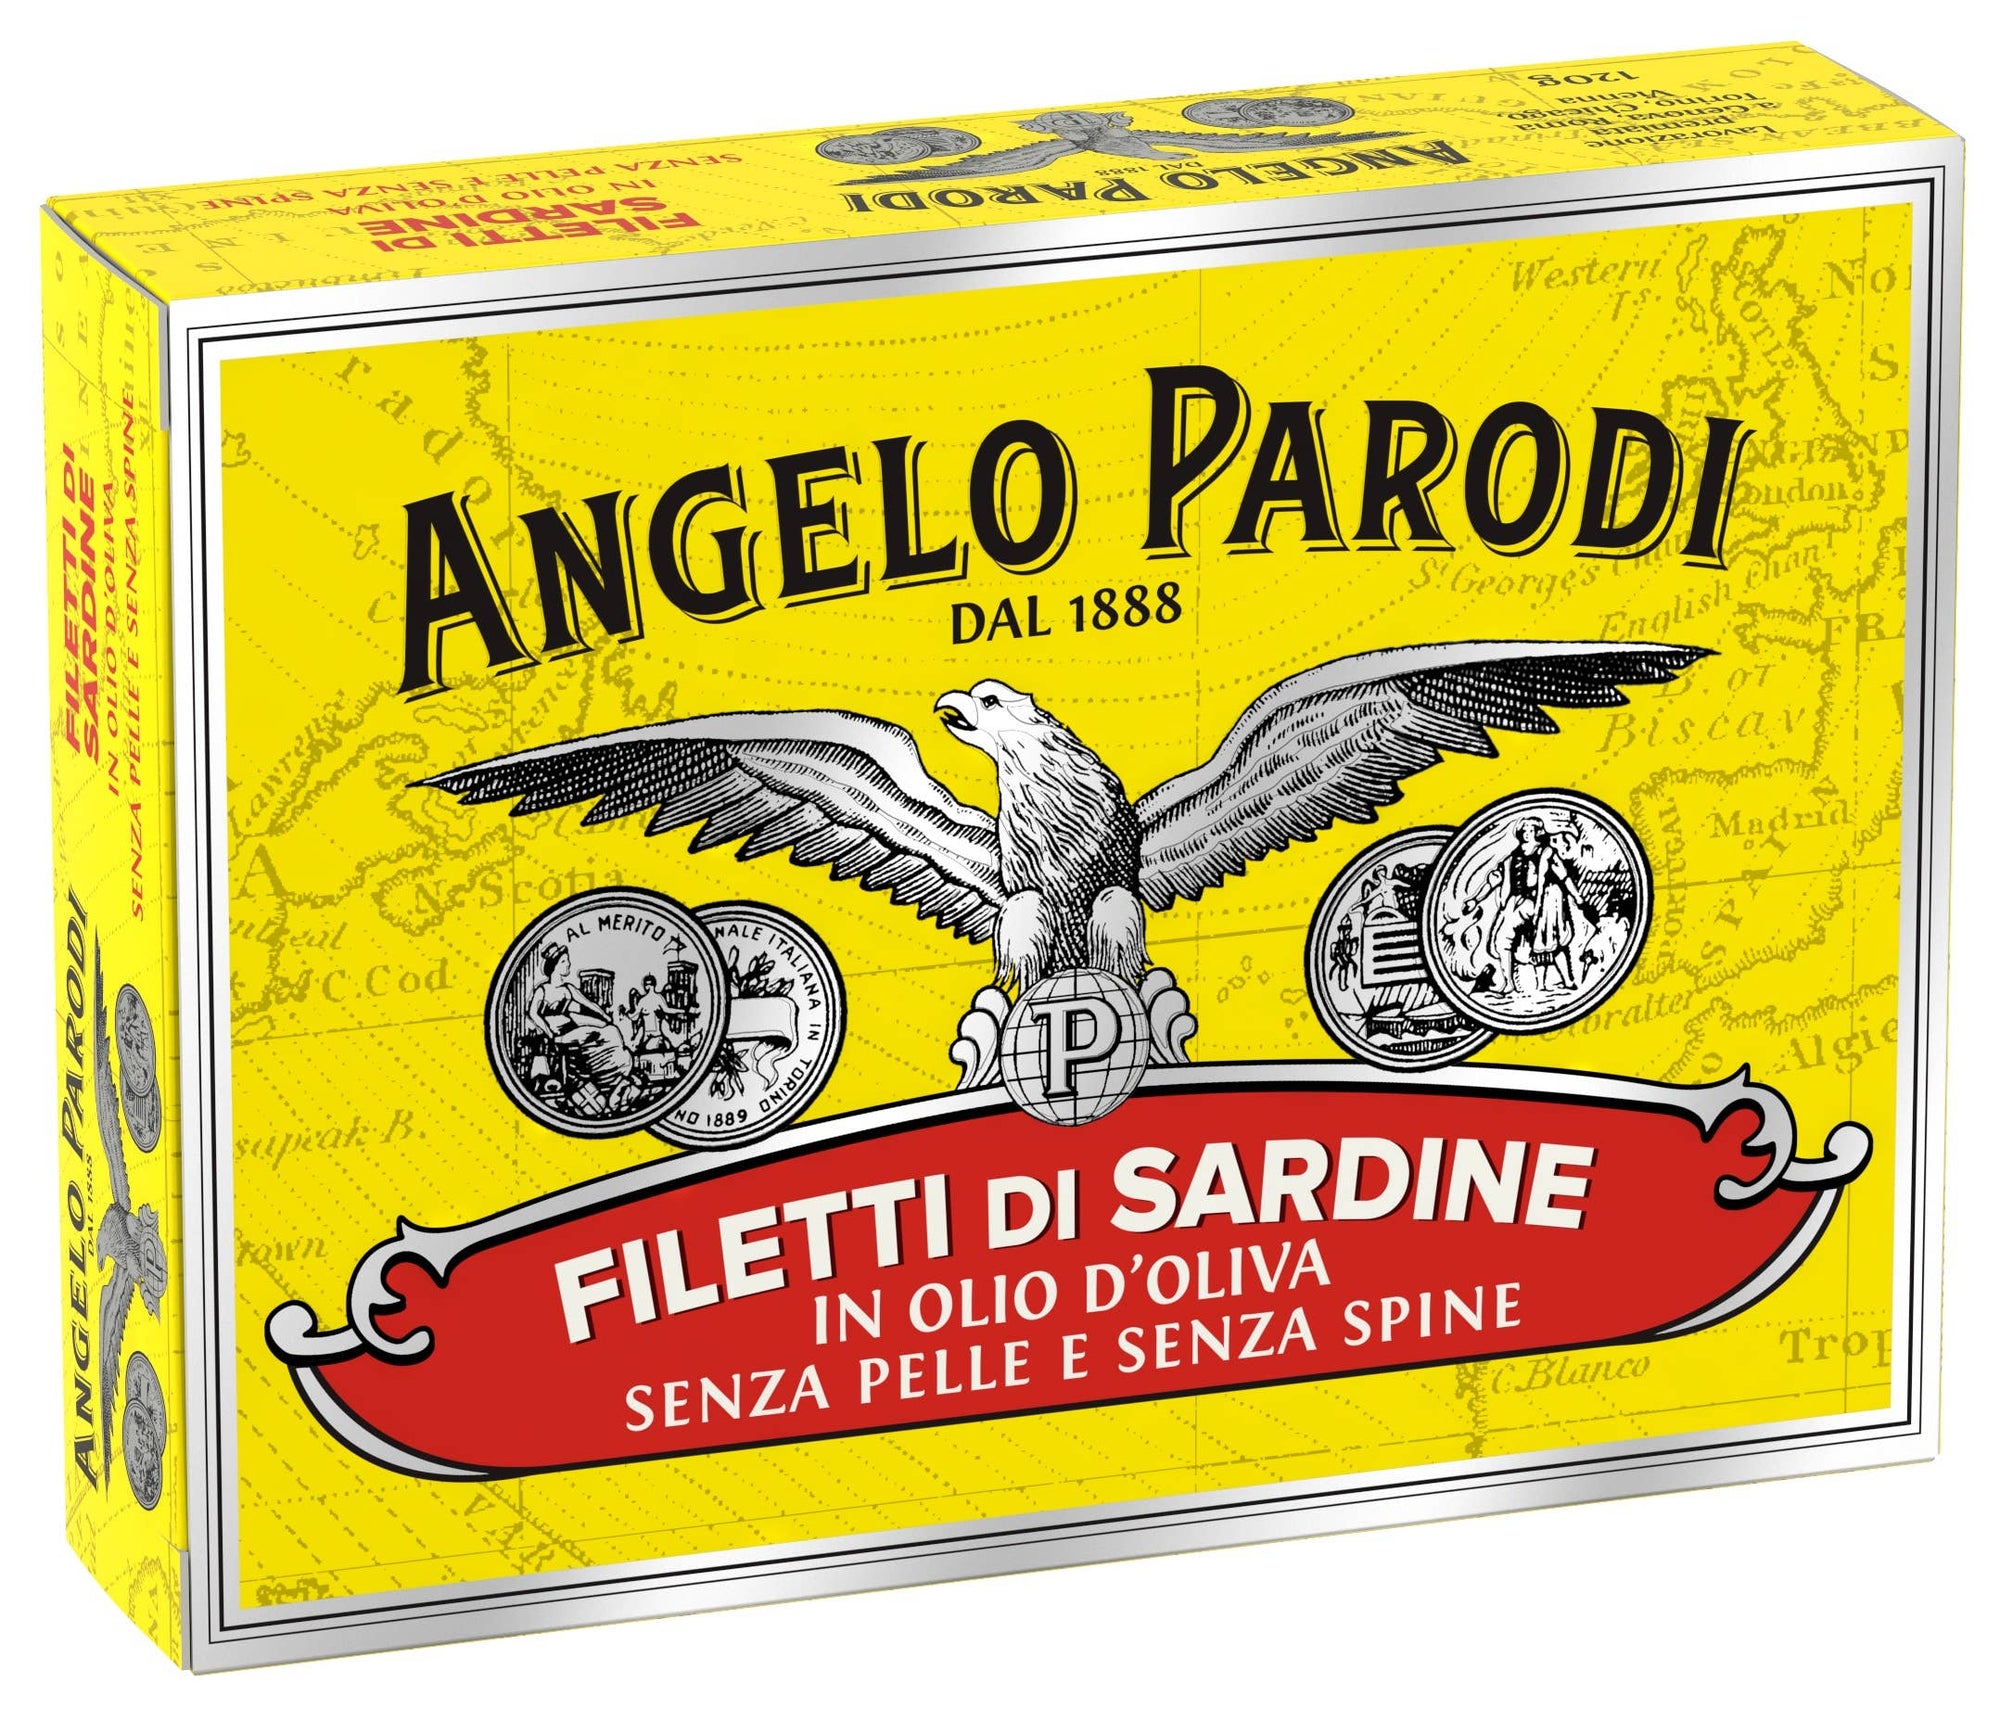 Angelo Parodi - Boneless and Skinless Sardines in Olive Oil - Space Camp